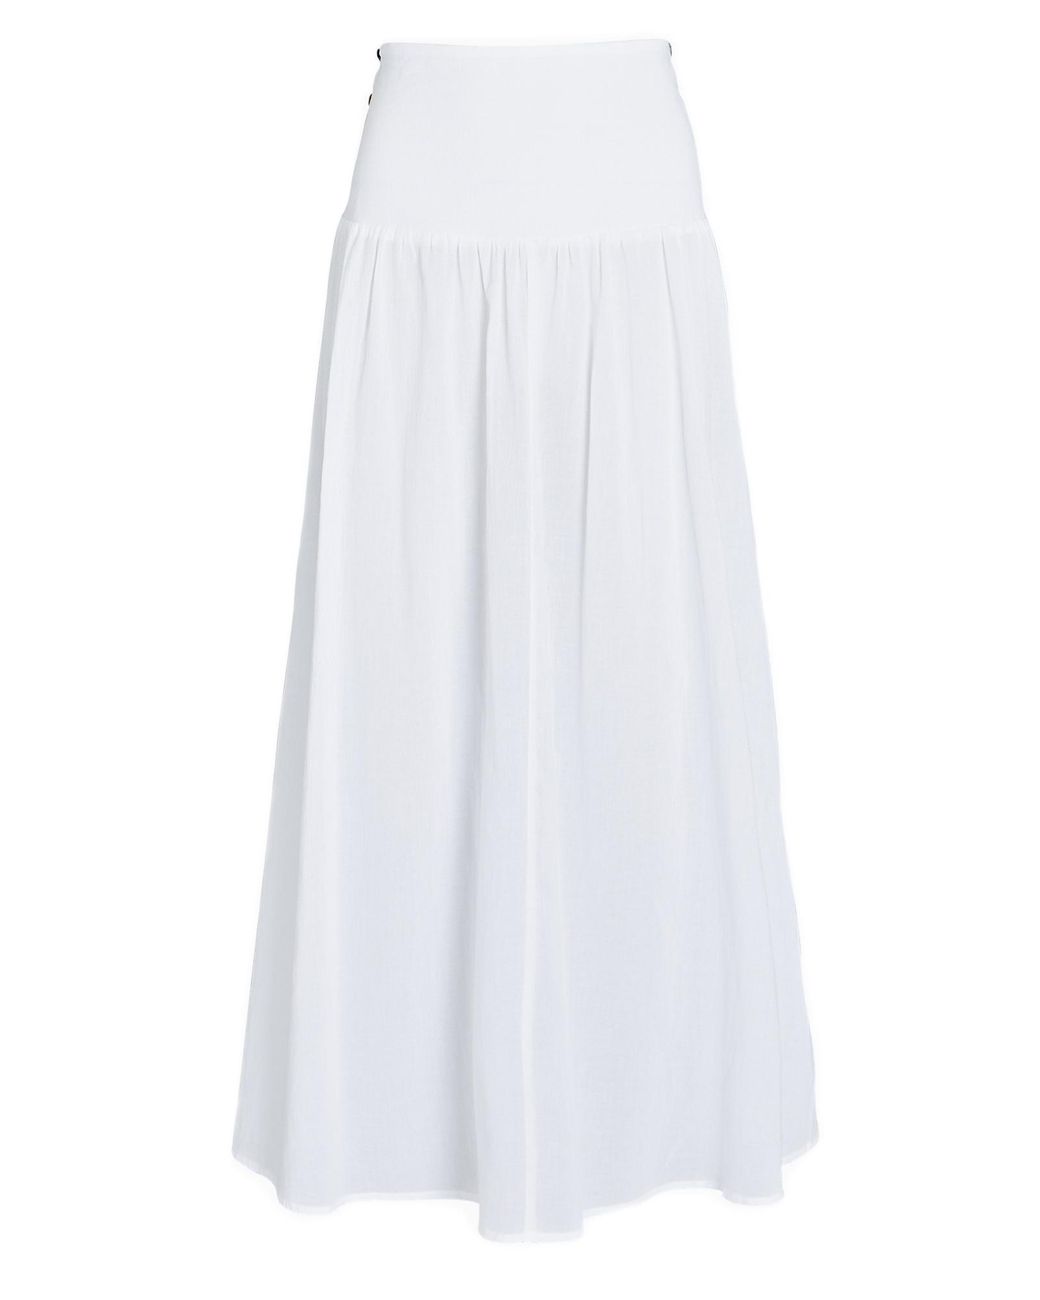 Ciao Lucia Kiki Cut-out Cotton Midi Skirt in White | Lyst